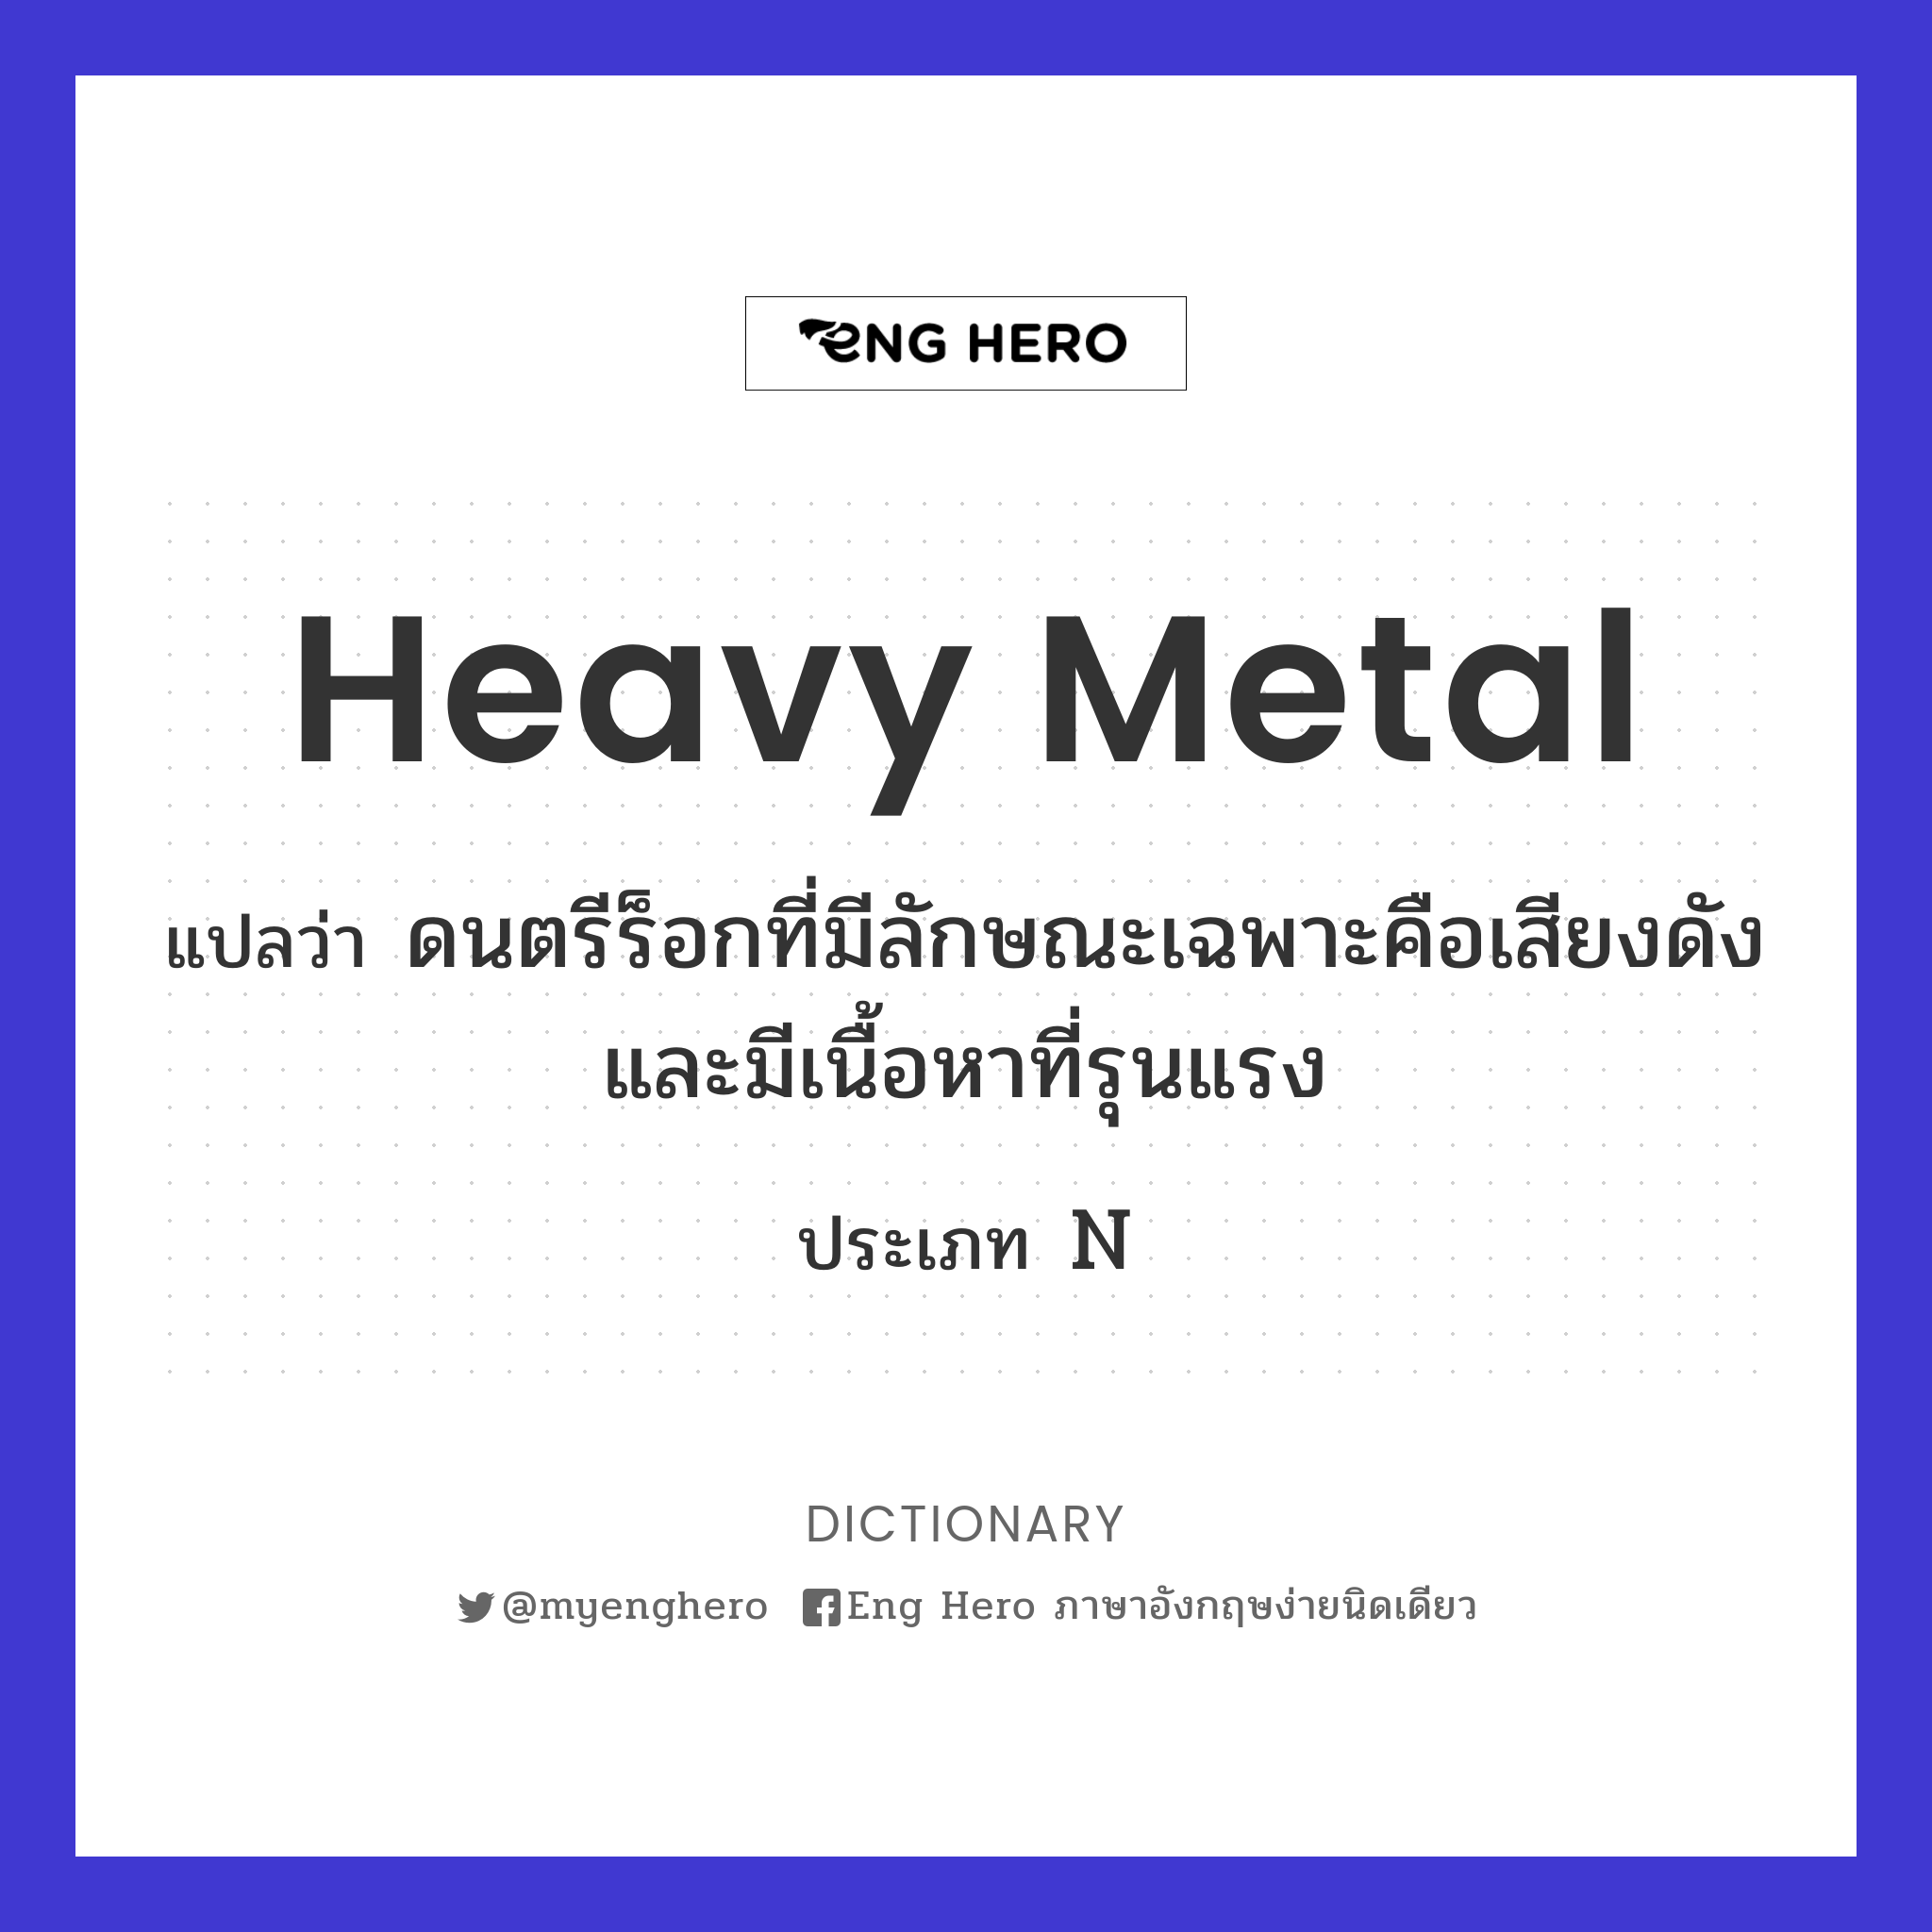 heavy metal